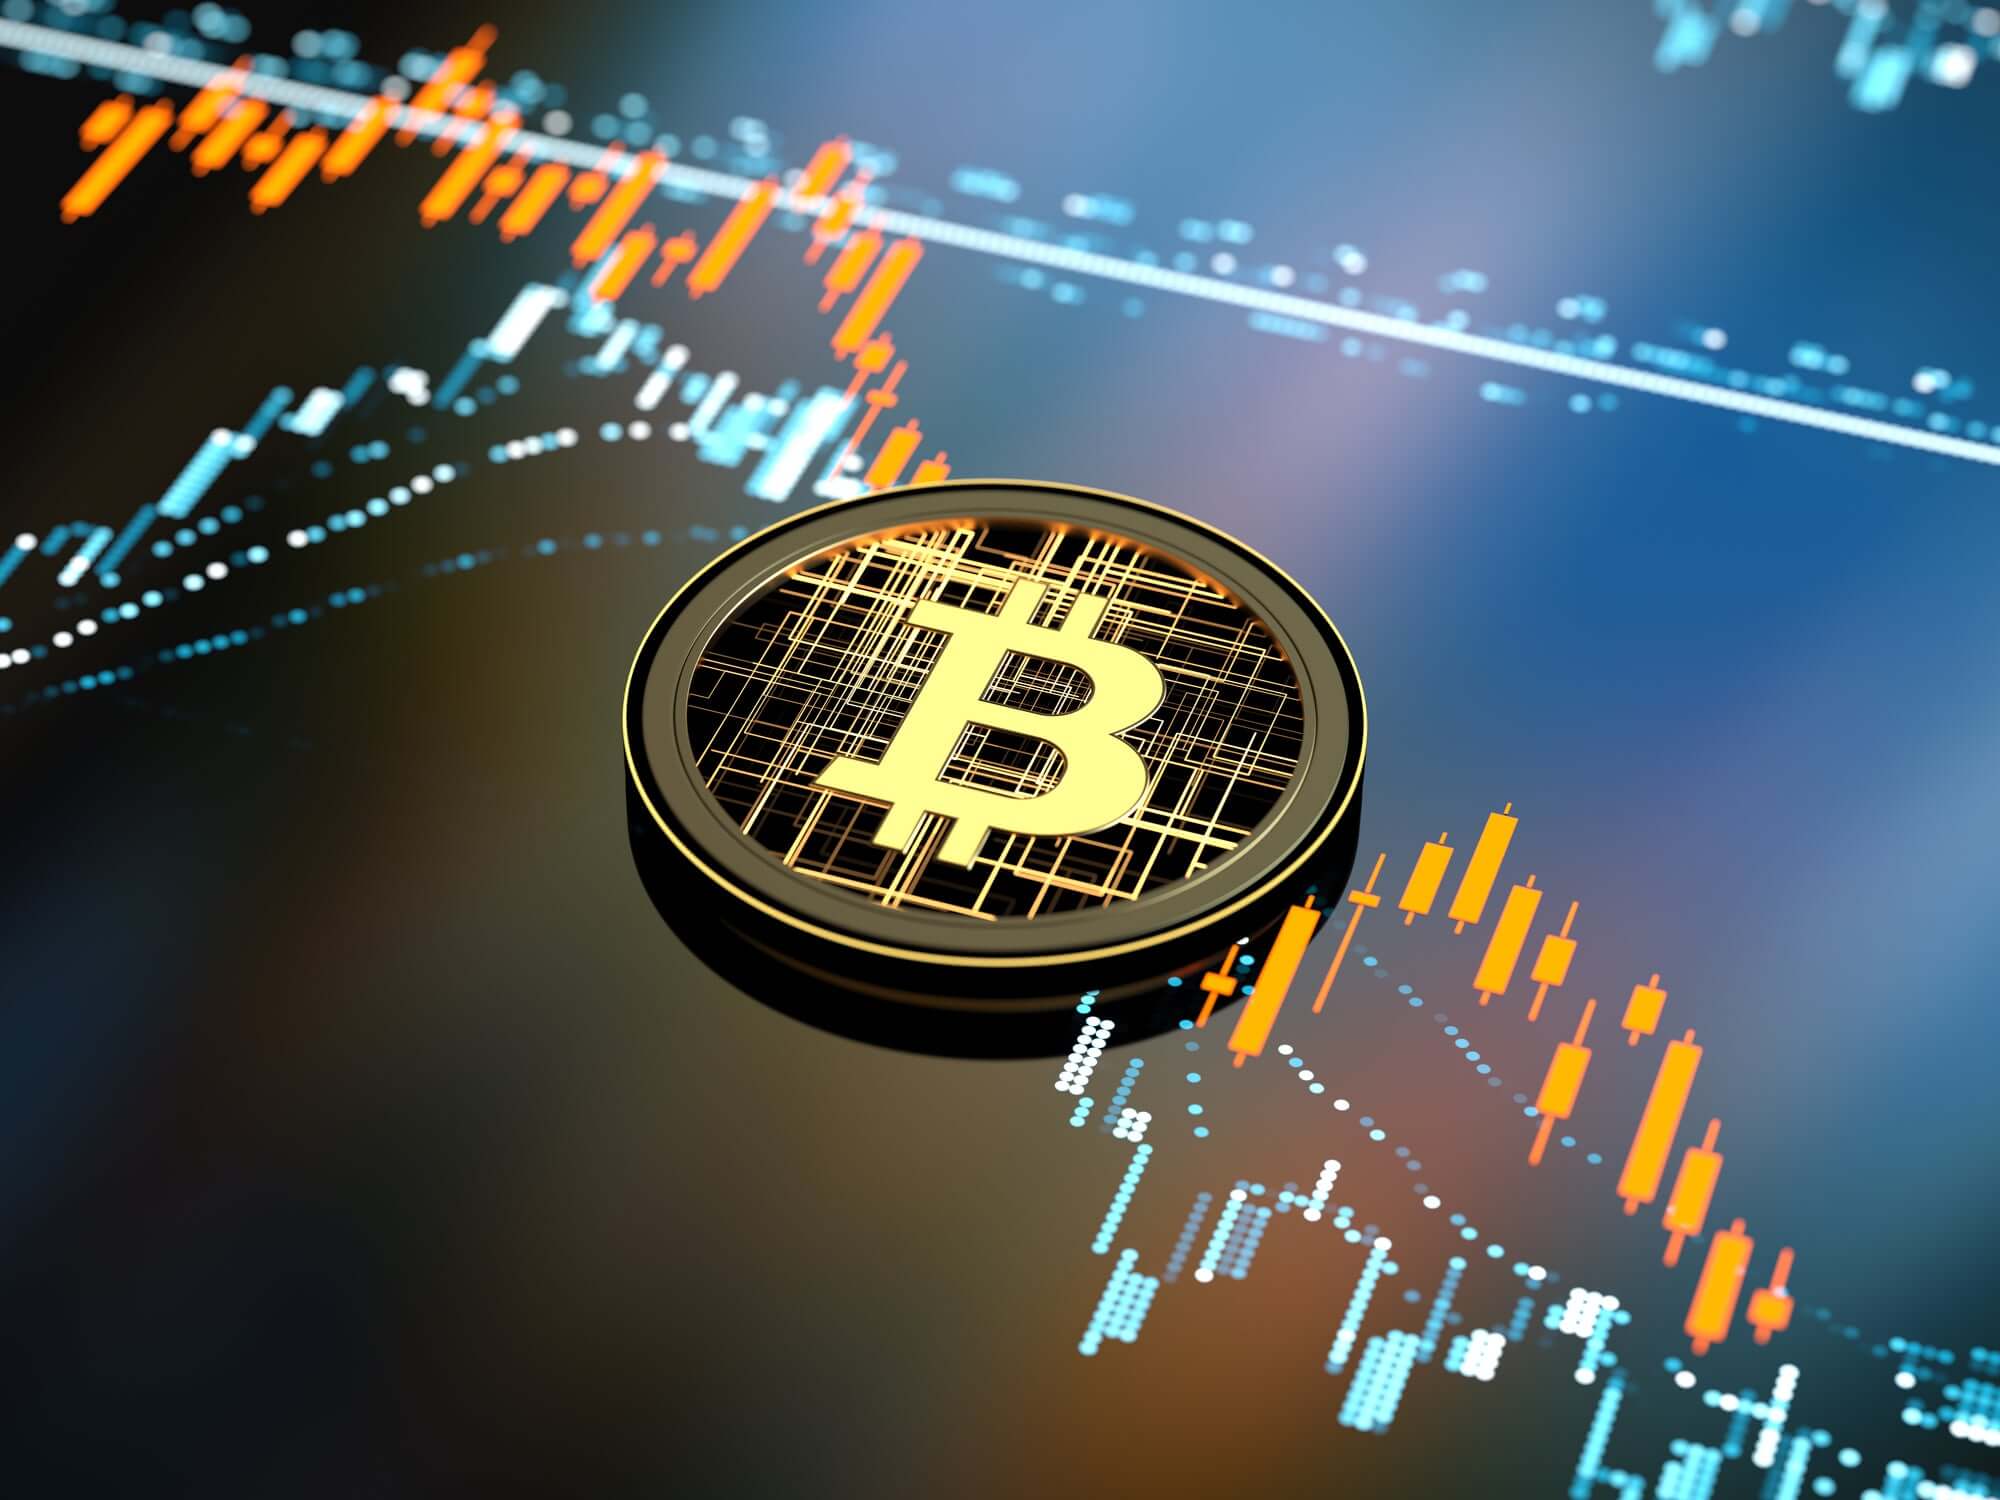 Huge Losses to Bitcoin Investors in the Crypto Crash